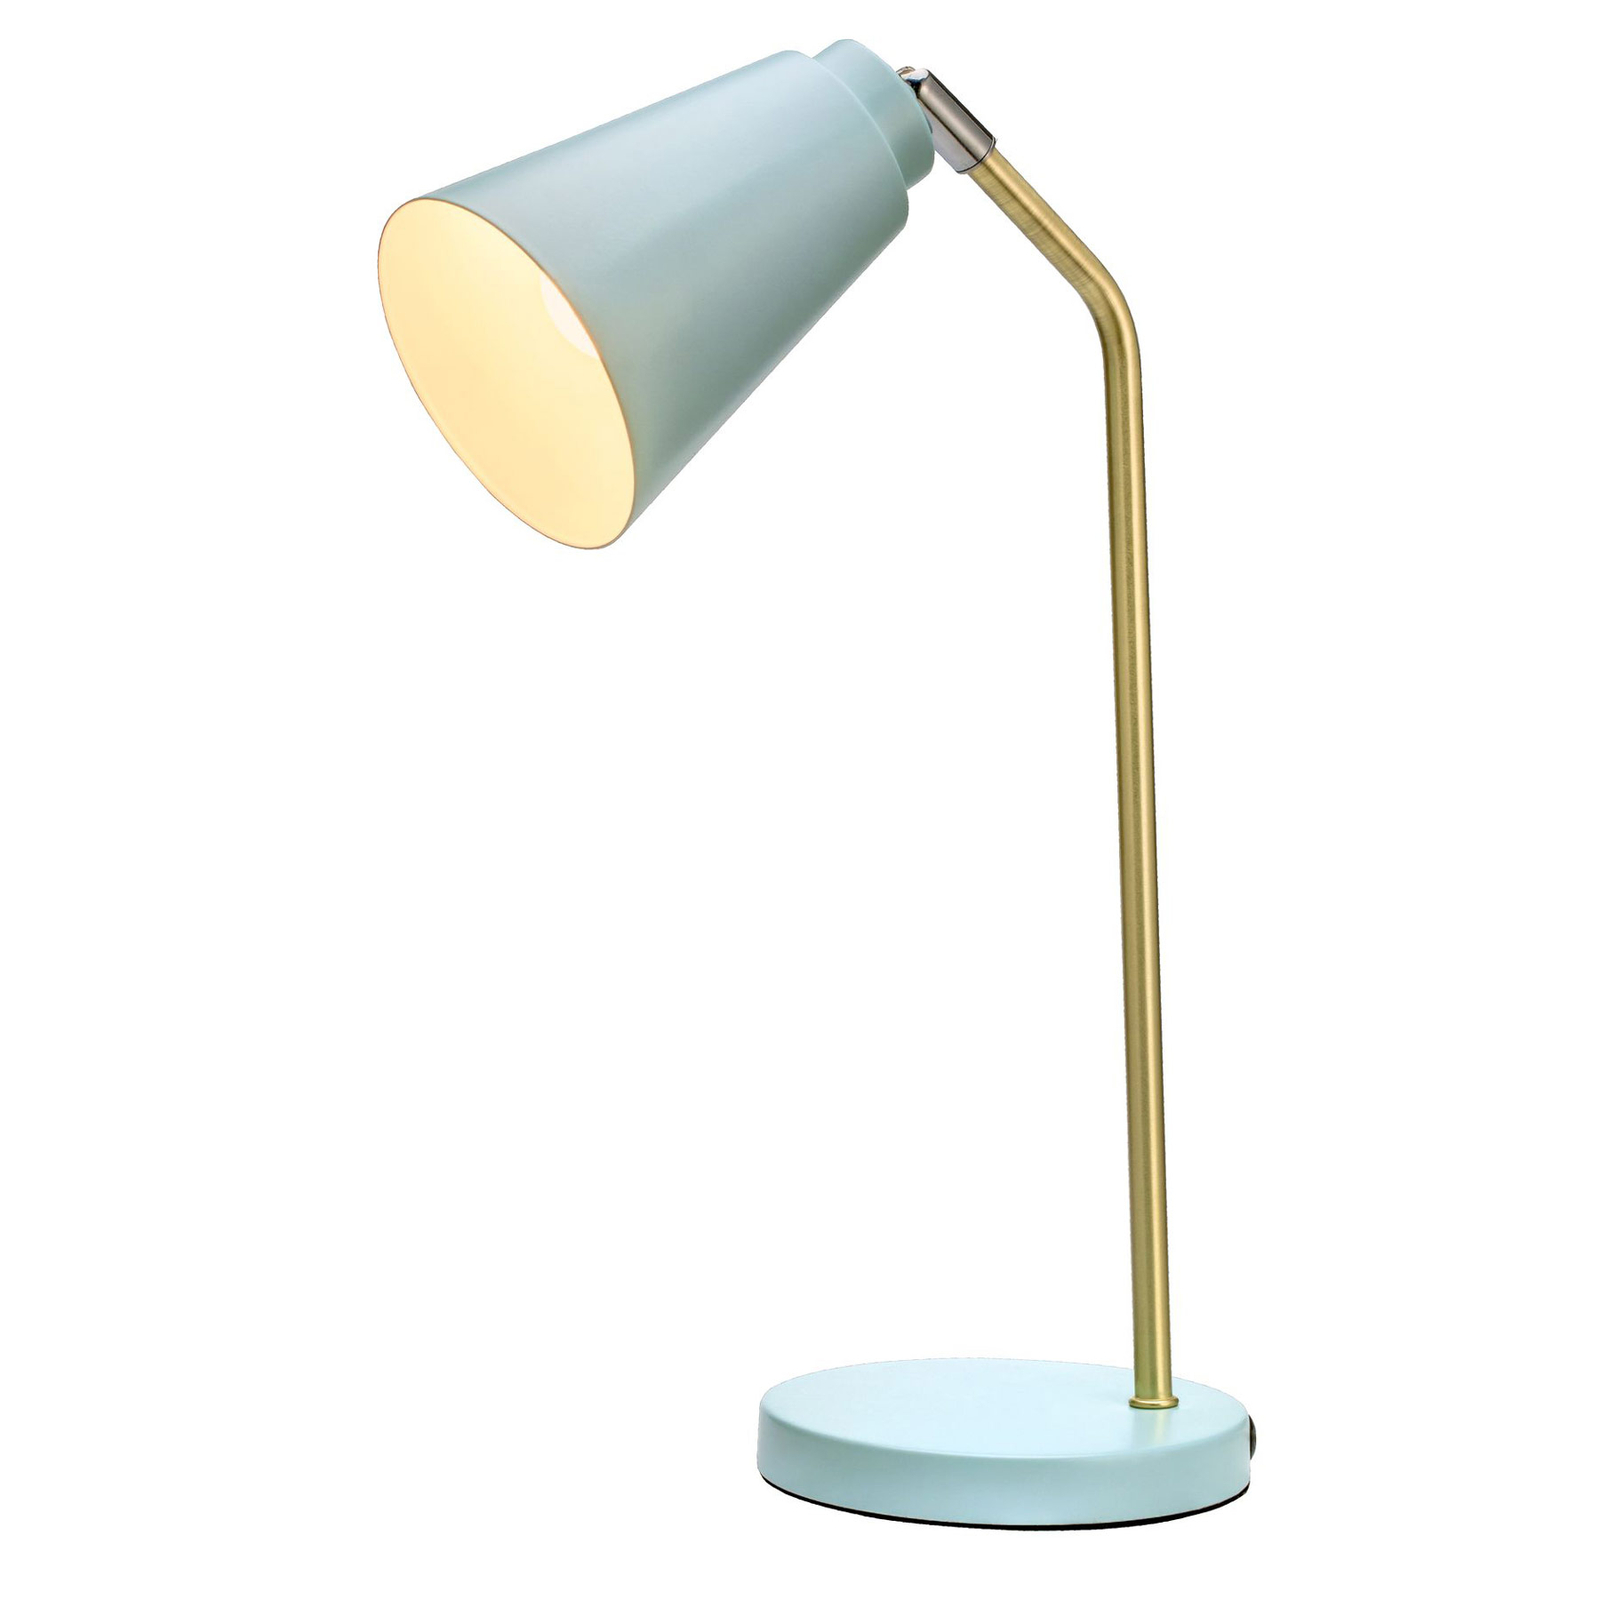 Pauleen True Charm table lamp in light blue/gold